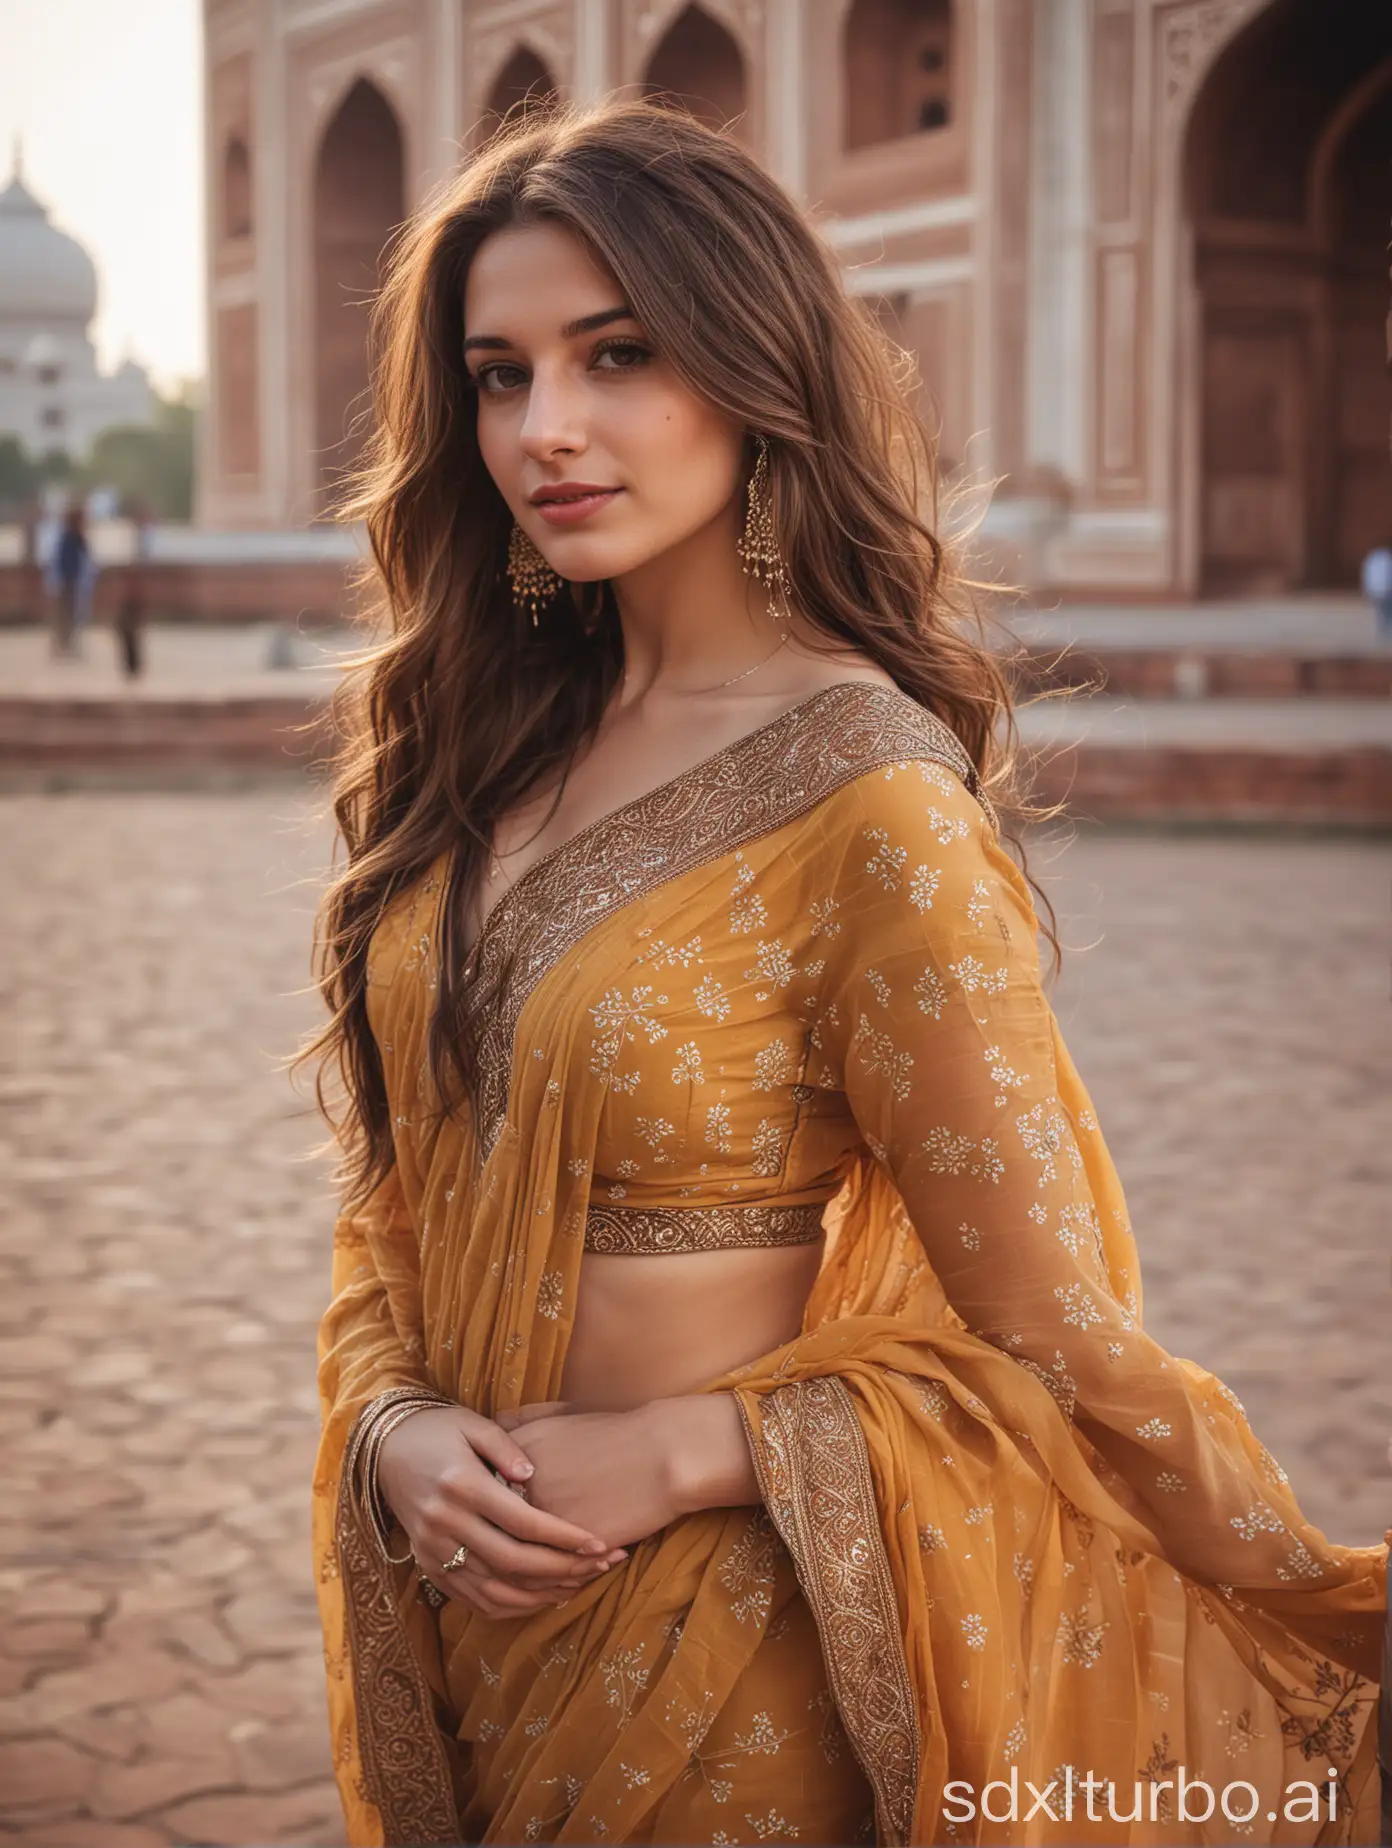 young Caucasian woman, long brown hair, wearing a saree, sexy, in front of Taj Mahal, bokeh